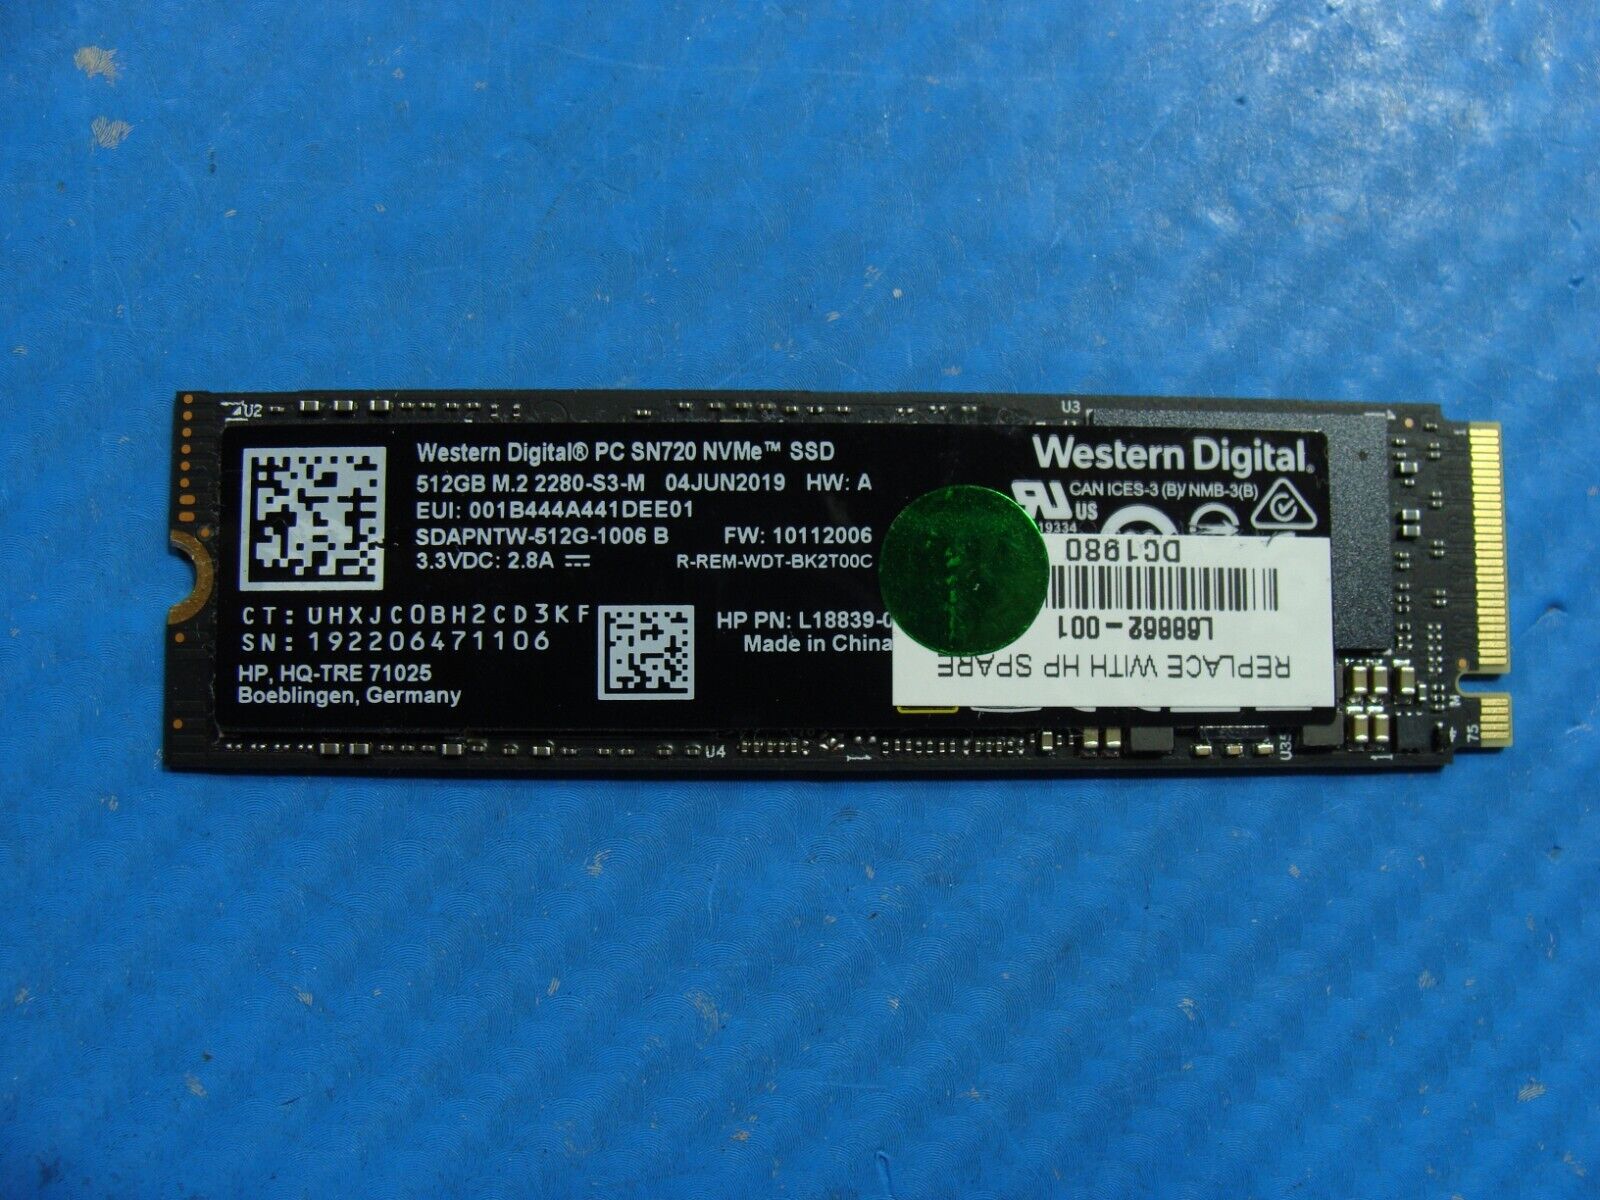 HP ZBook 15 G6 Western Digital 512GB NVMe M.2 SSD SDAPNTW-512G-1006 L68862-001